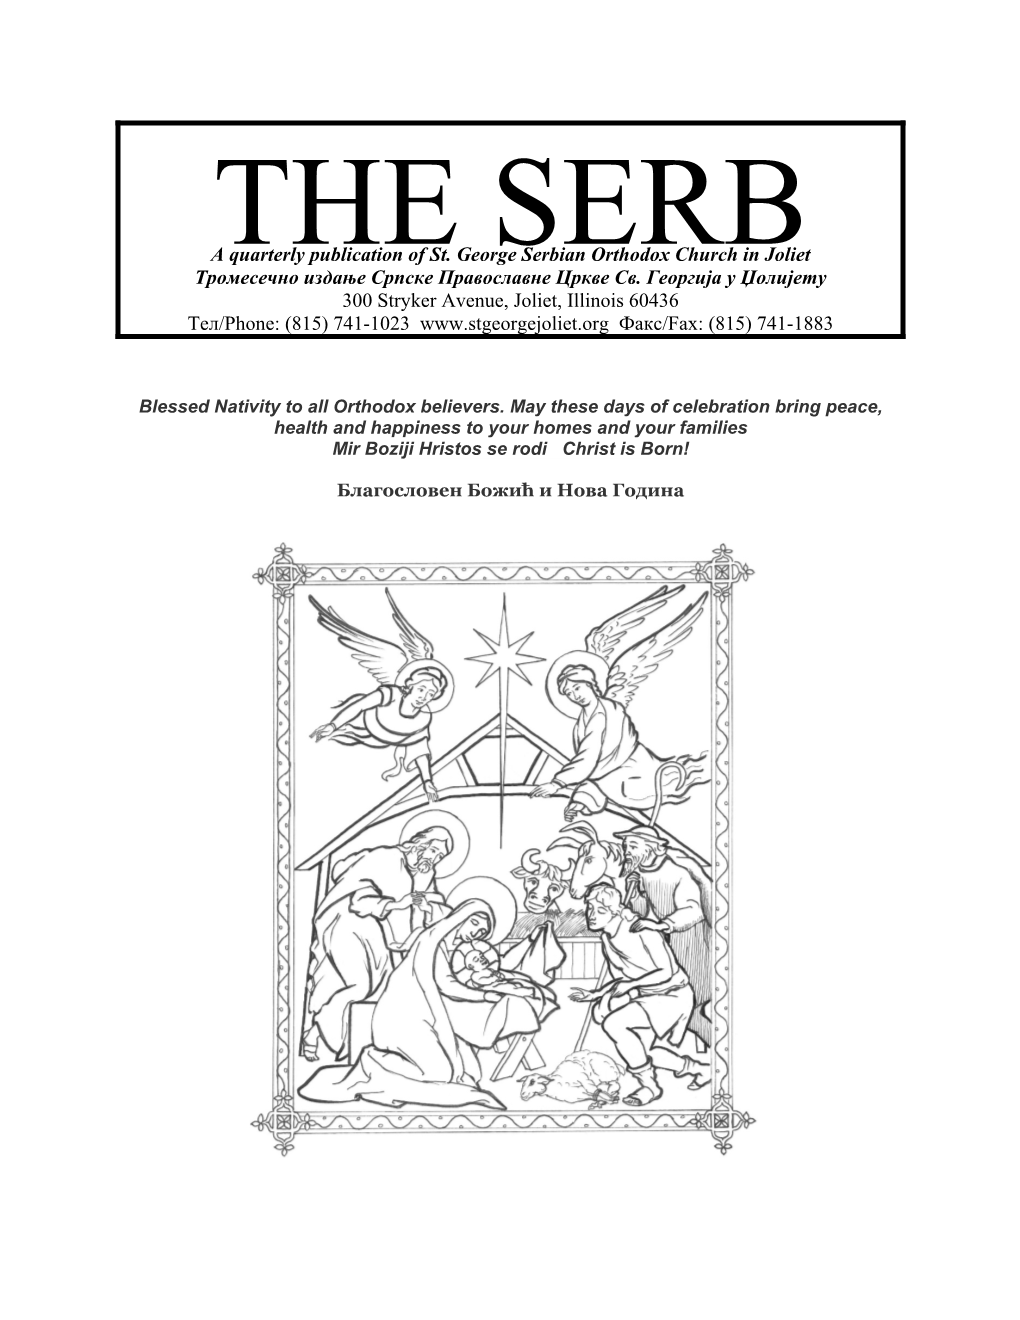 A Quarterly Publication of St. George Serbian Orthodox Church in Joliet